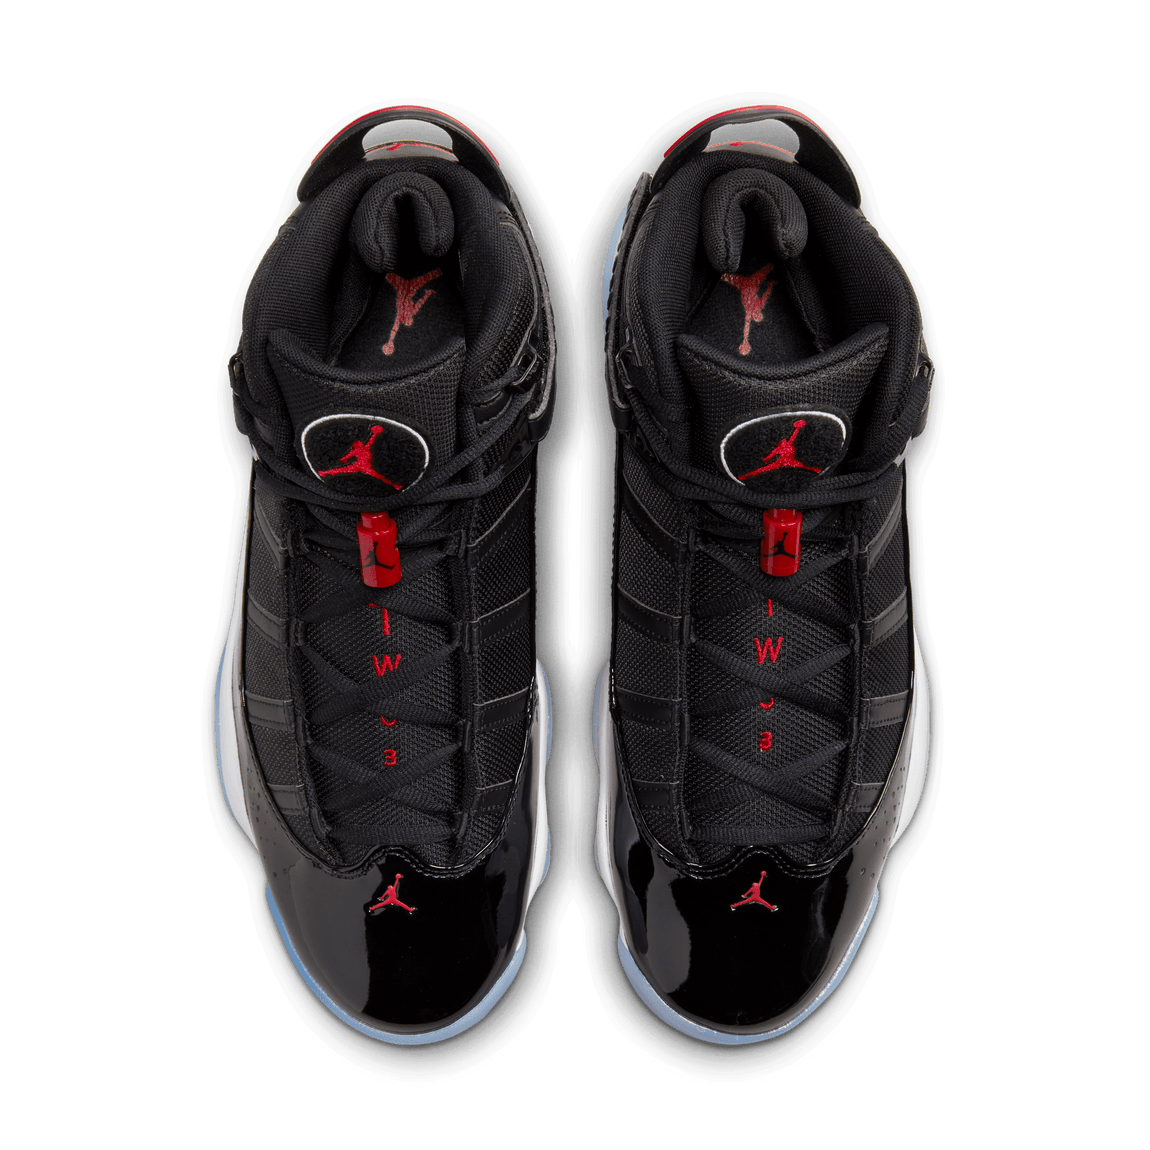 Jordan 6 Rings (Black/Gym Red/White) - Jordan 6 Rings (Black/Gym Red/White) - 